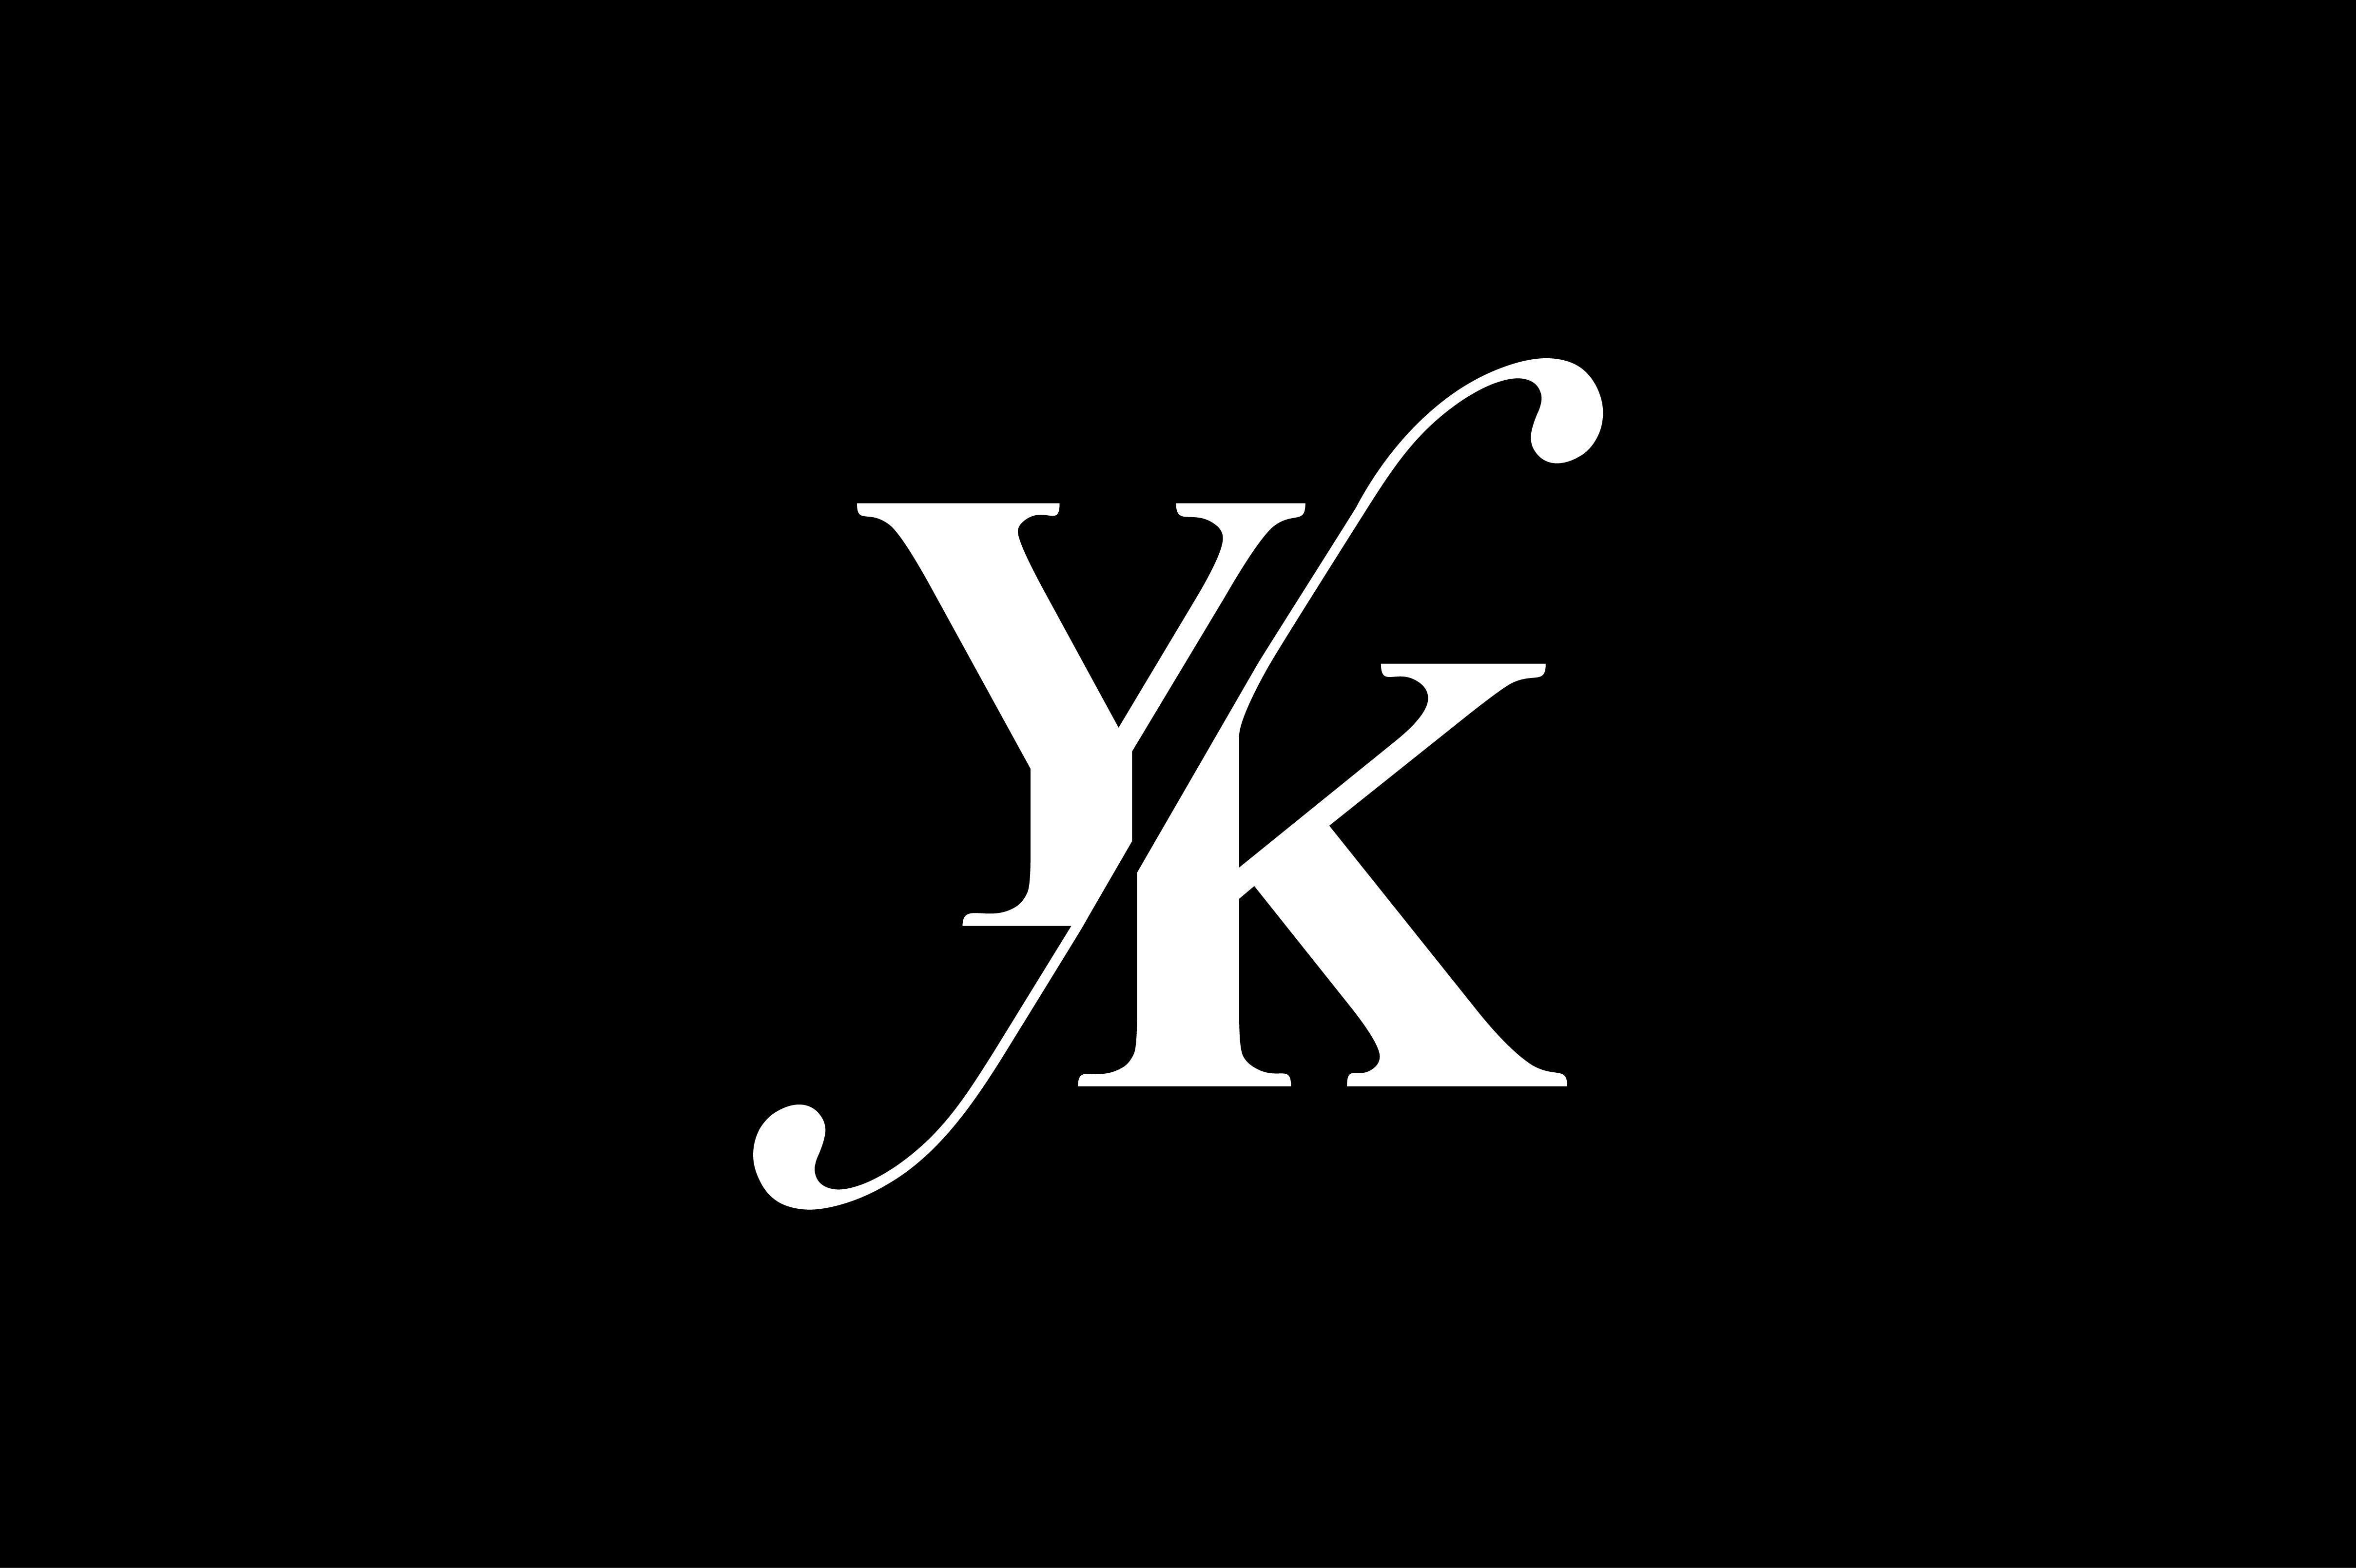 Yk Monogram Logo Design By Vectorseller